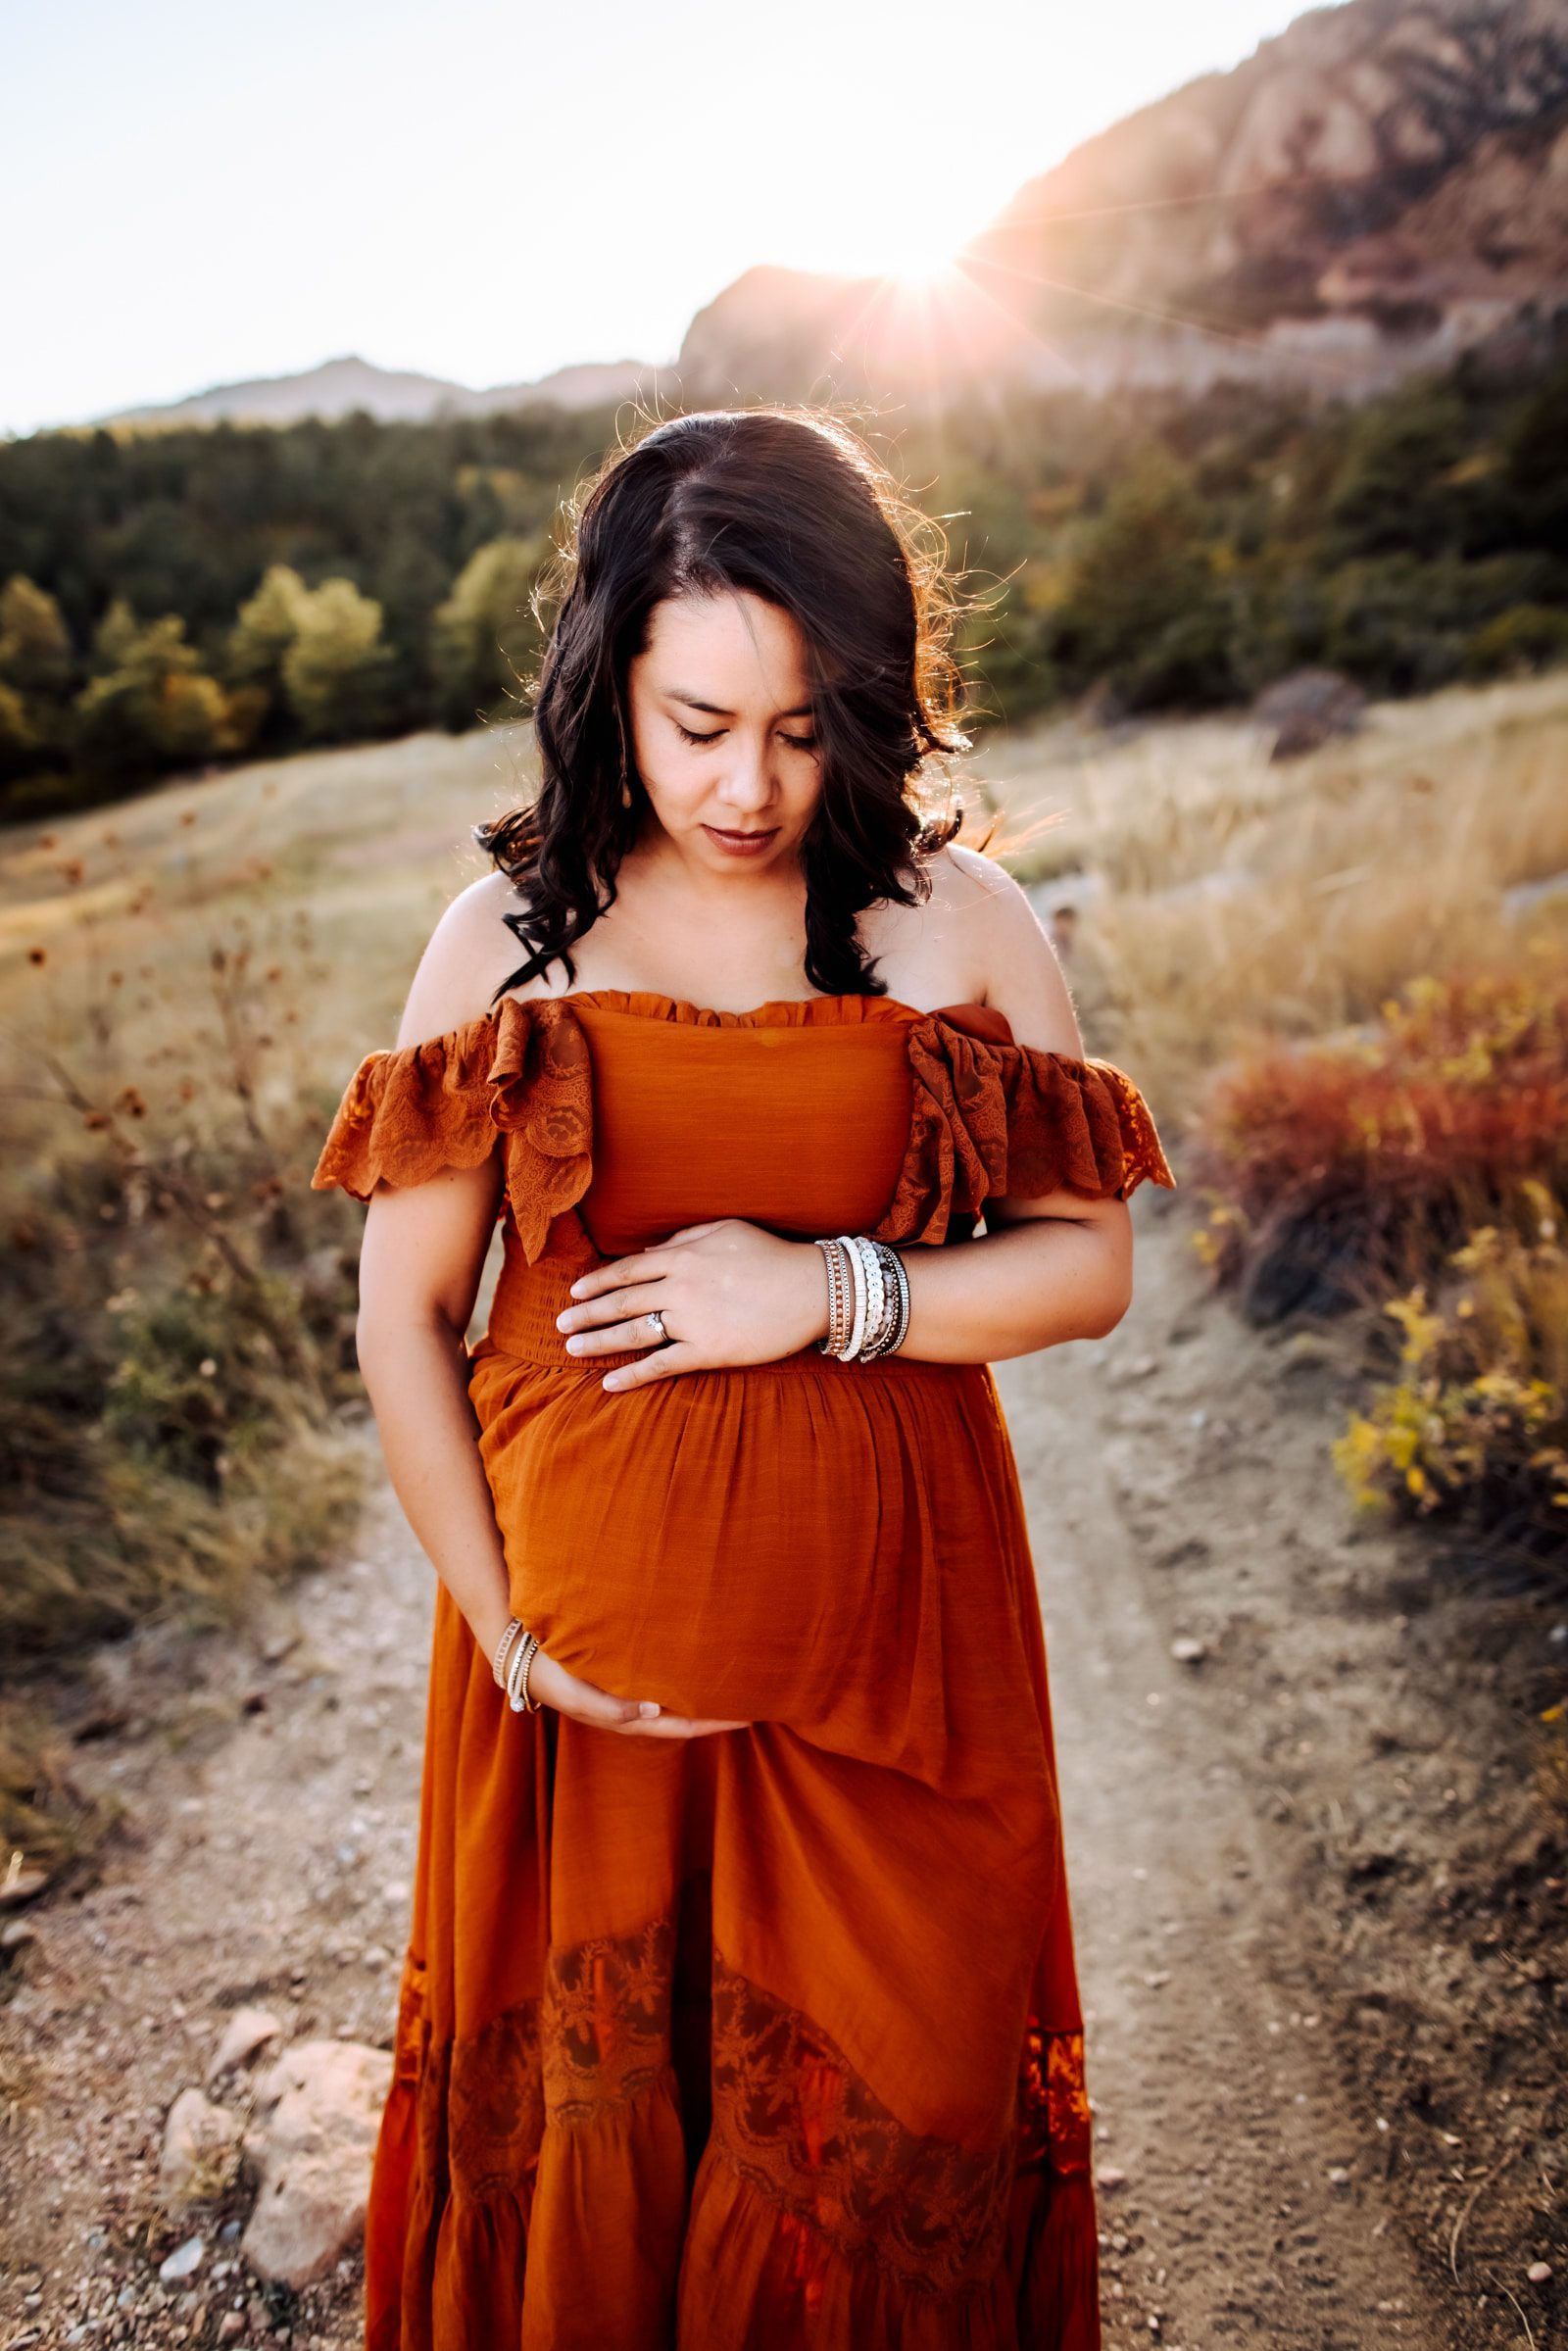 Colorado Springs Maternity Photographer